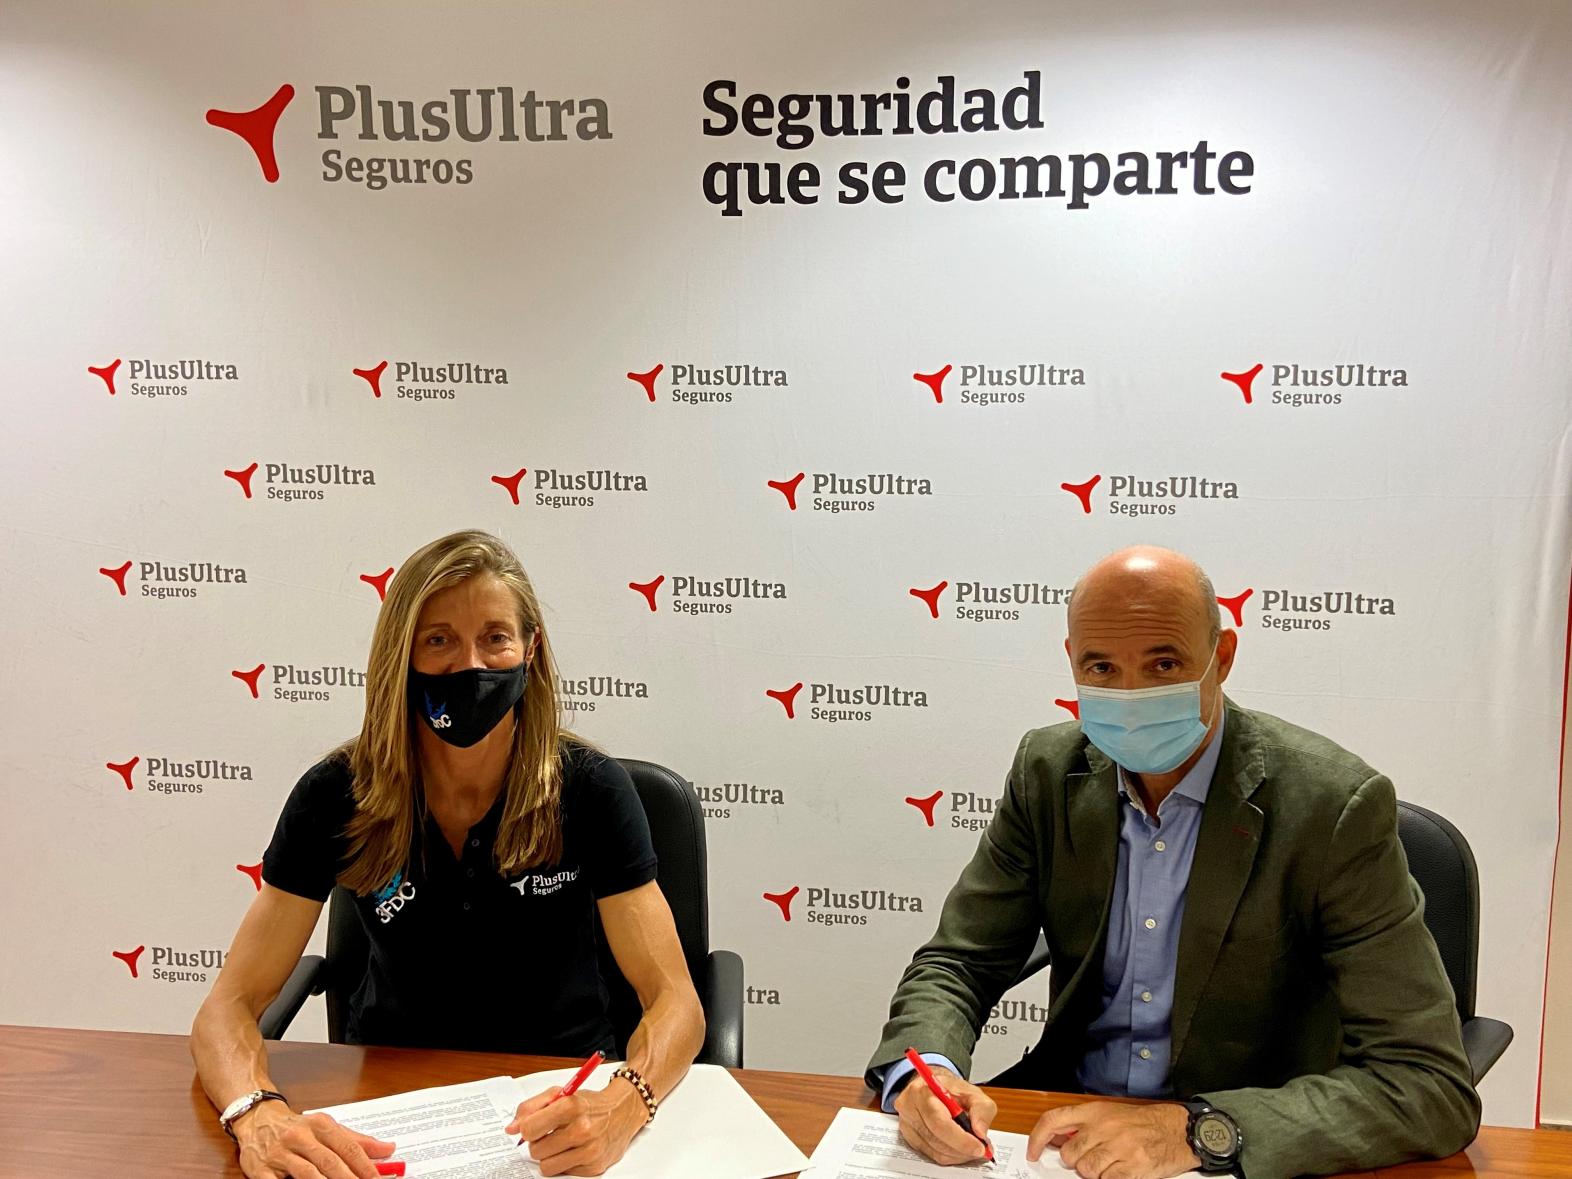 Plus Ultra Seguros, sponsor of the Valencian athletics club Team 3FdC 